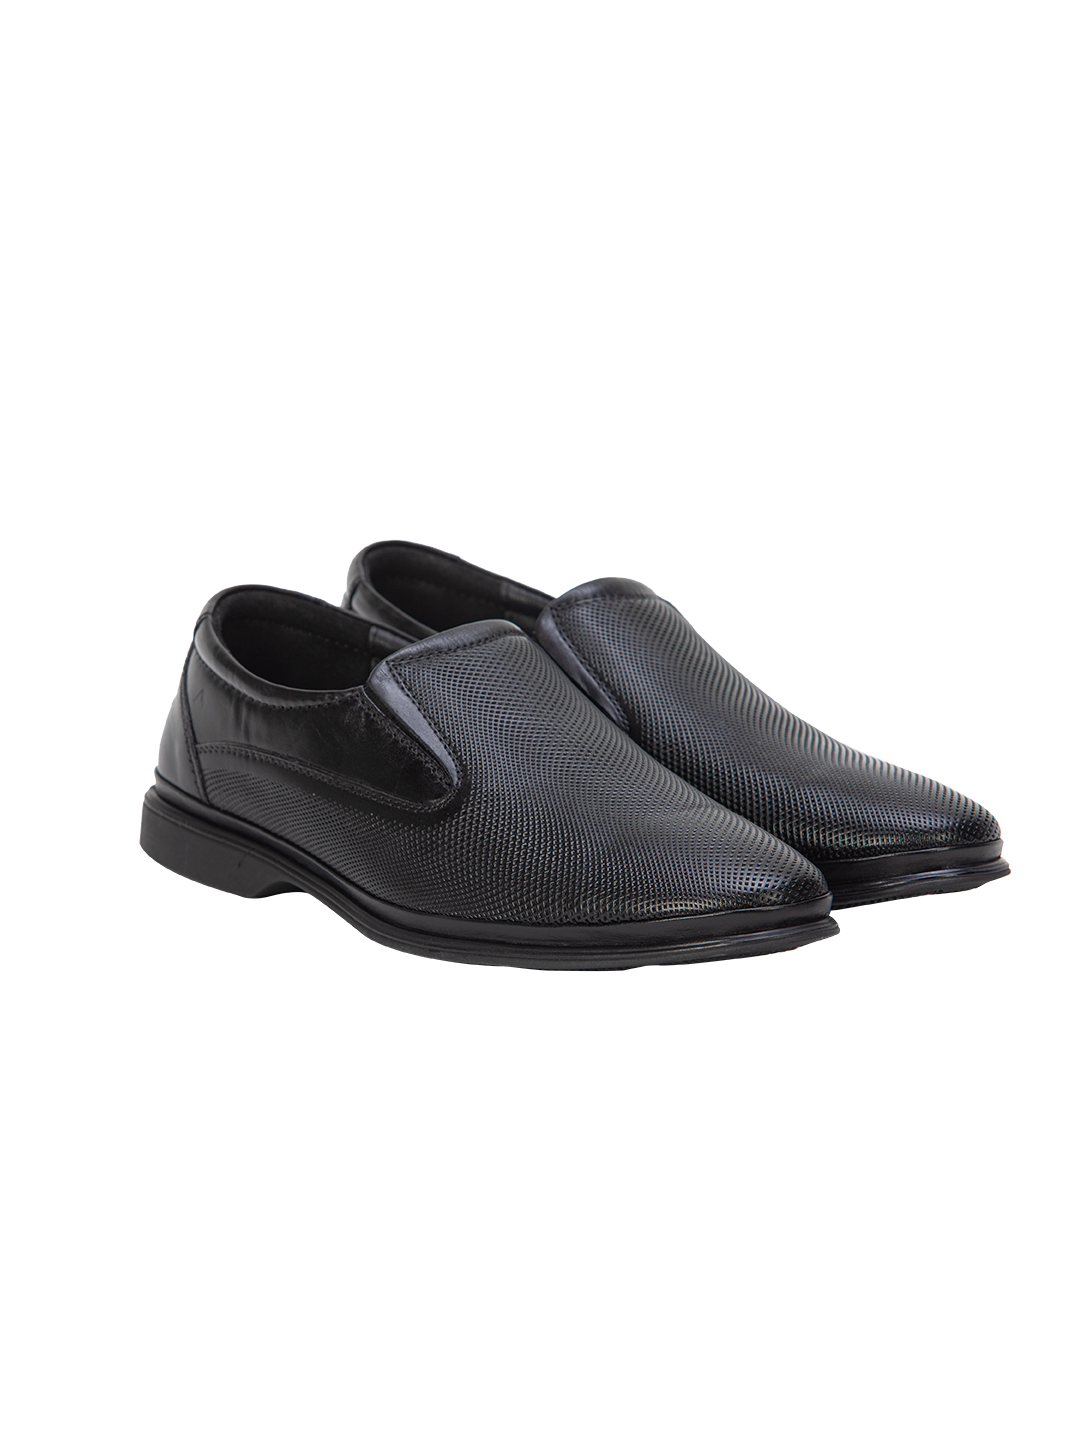 Buy Von Wellx Germany Comfort Mondaine Casual Black Shoes Online in Bangalore